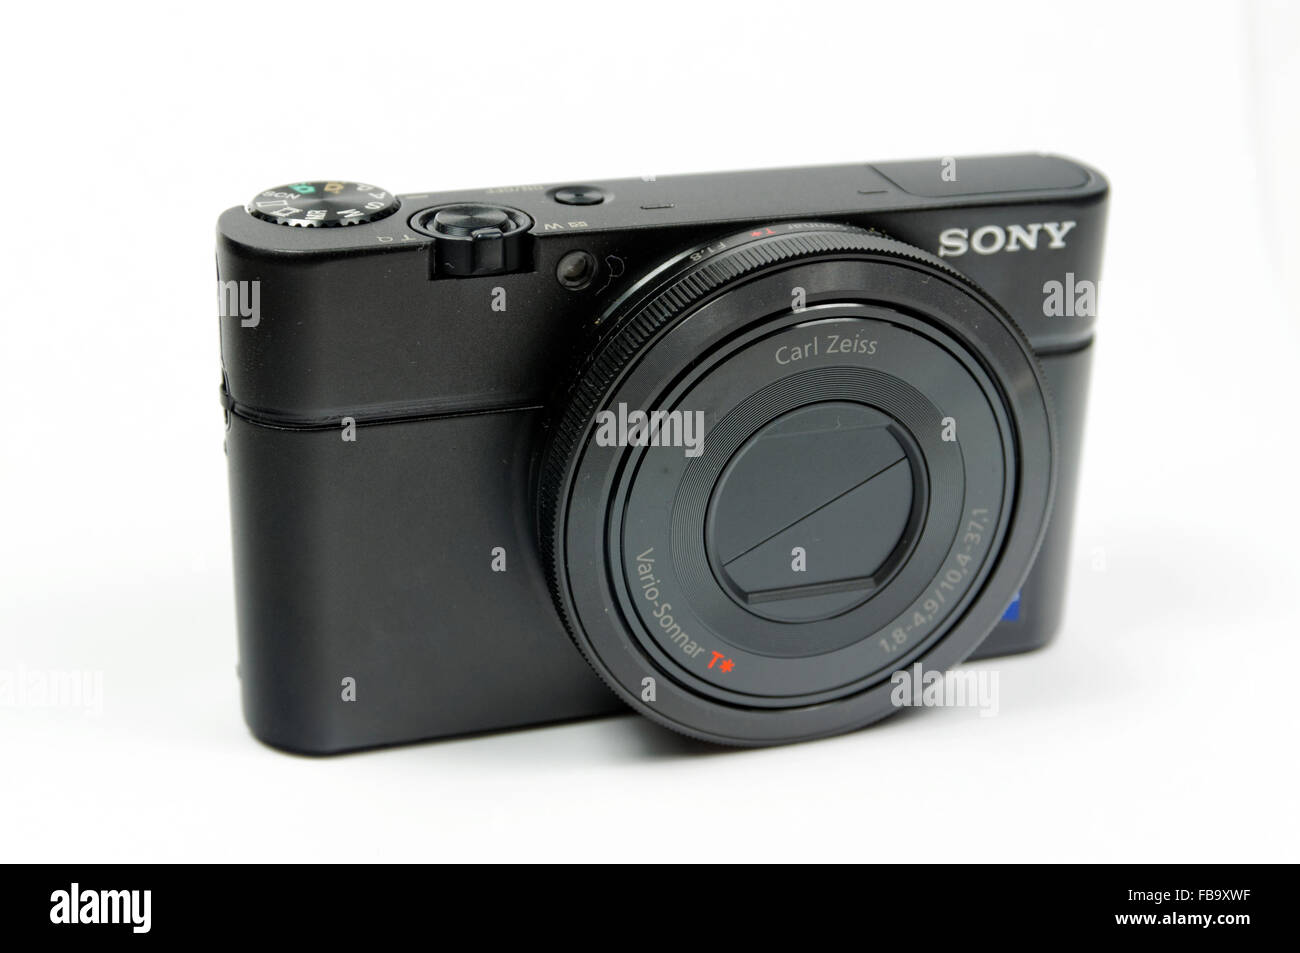 Sony RX100 compact digital camera. Stock Photo